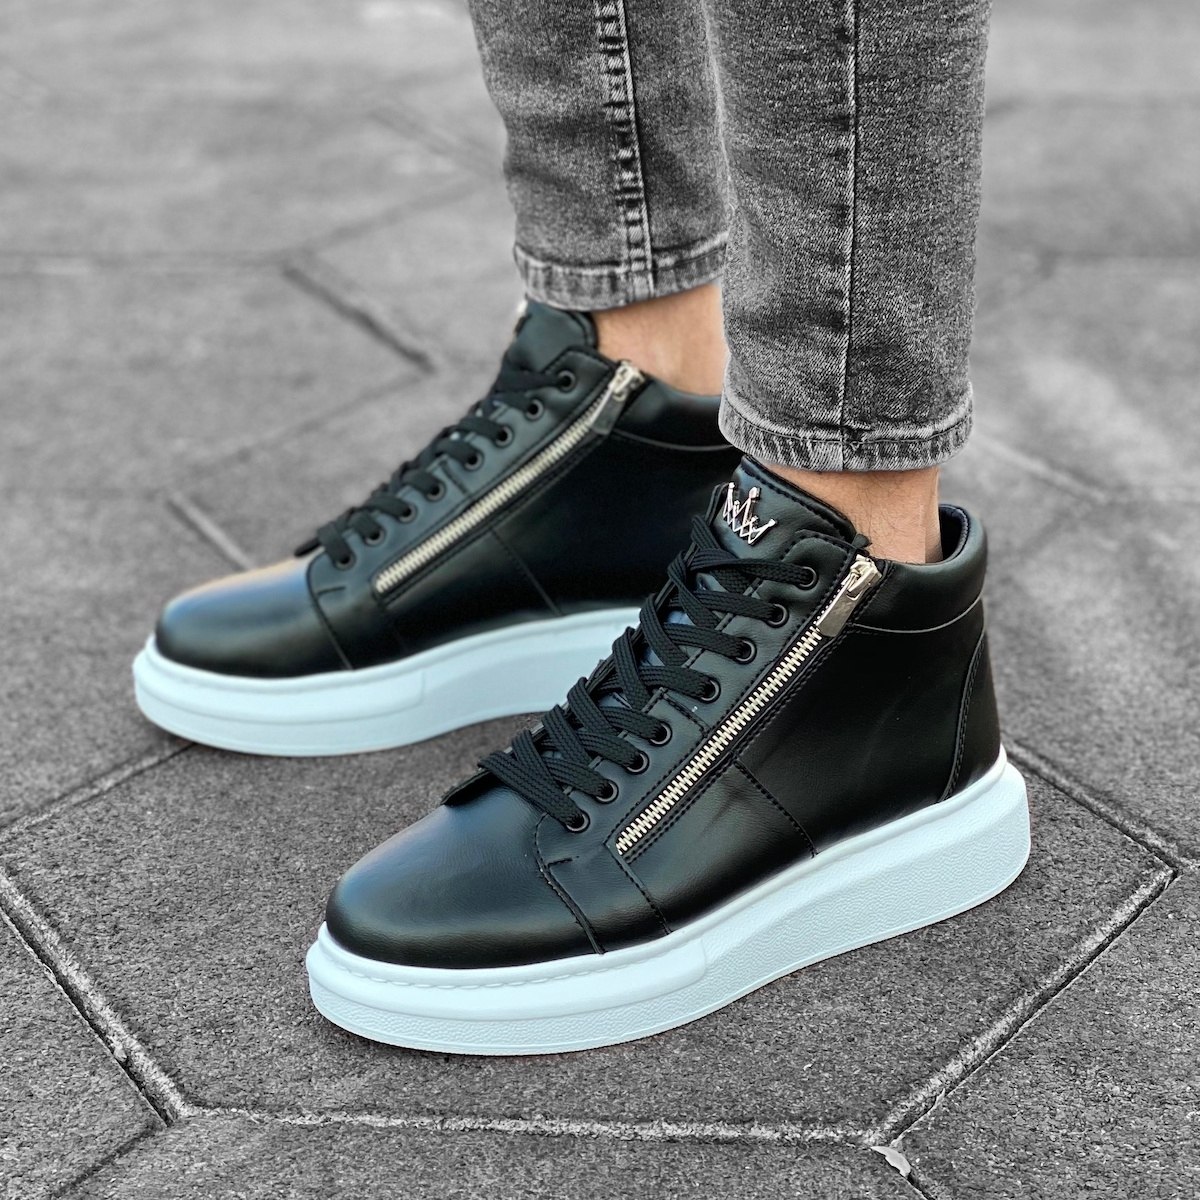 Herren High Top Sneakers Designer Schuhe mit Reissverschluss in schwarz-weiss | Martin Valen